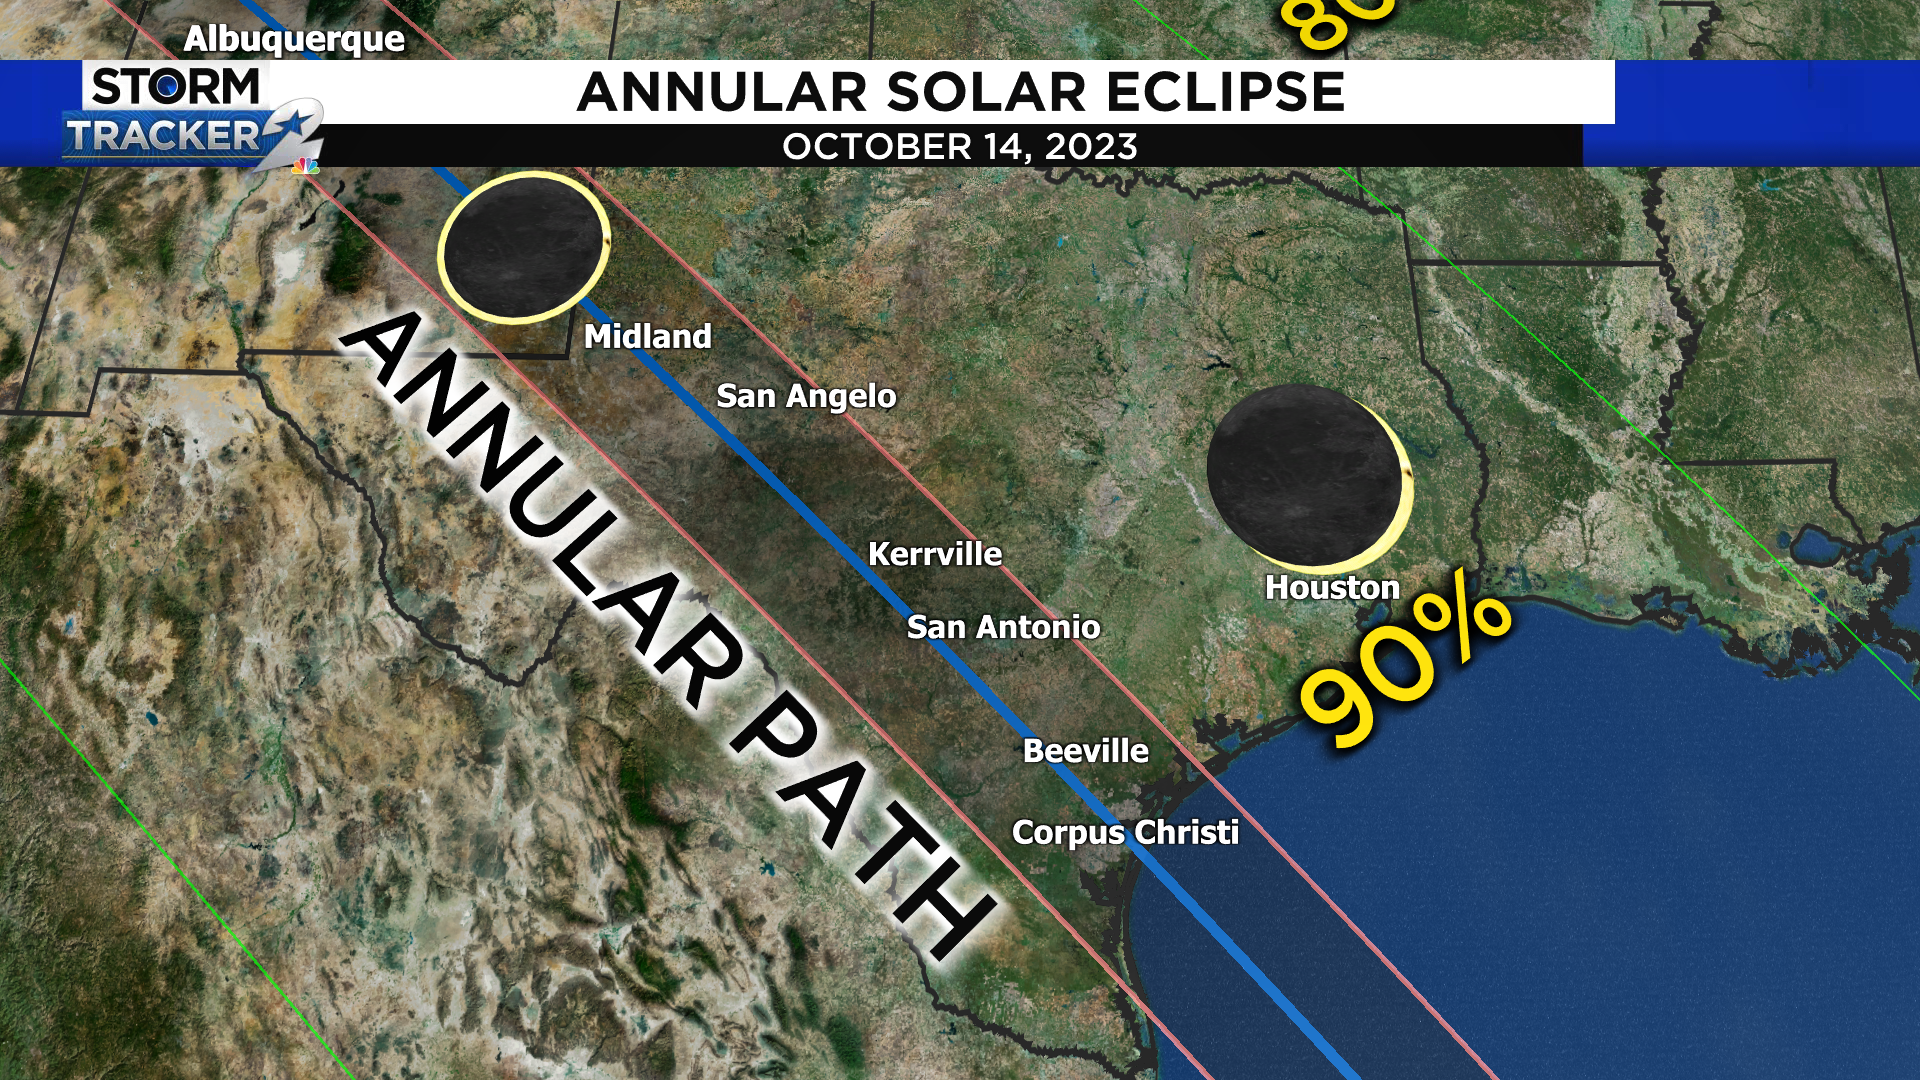 Eclipse photos here! Annular solar eclipse October 14, 2023